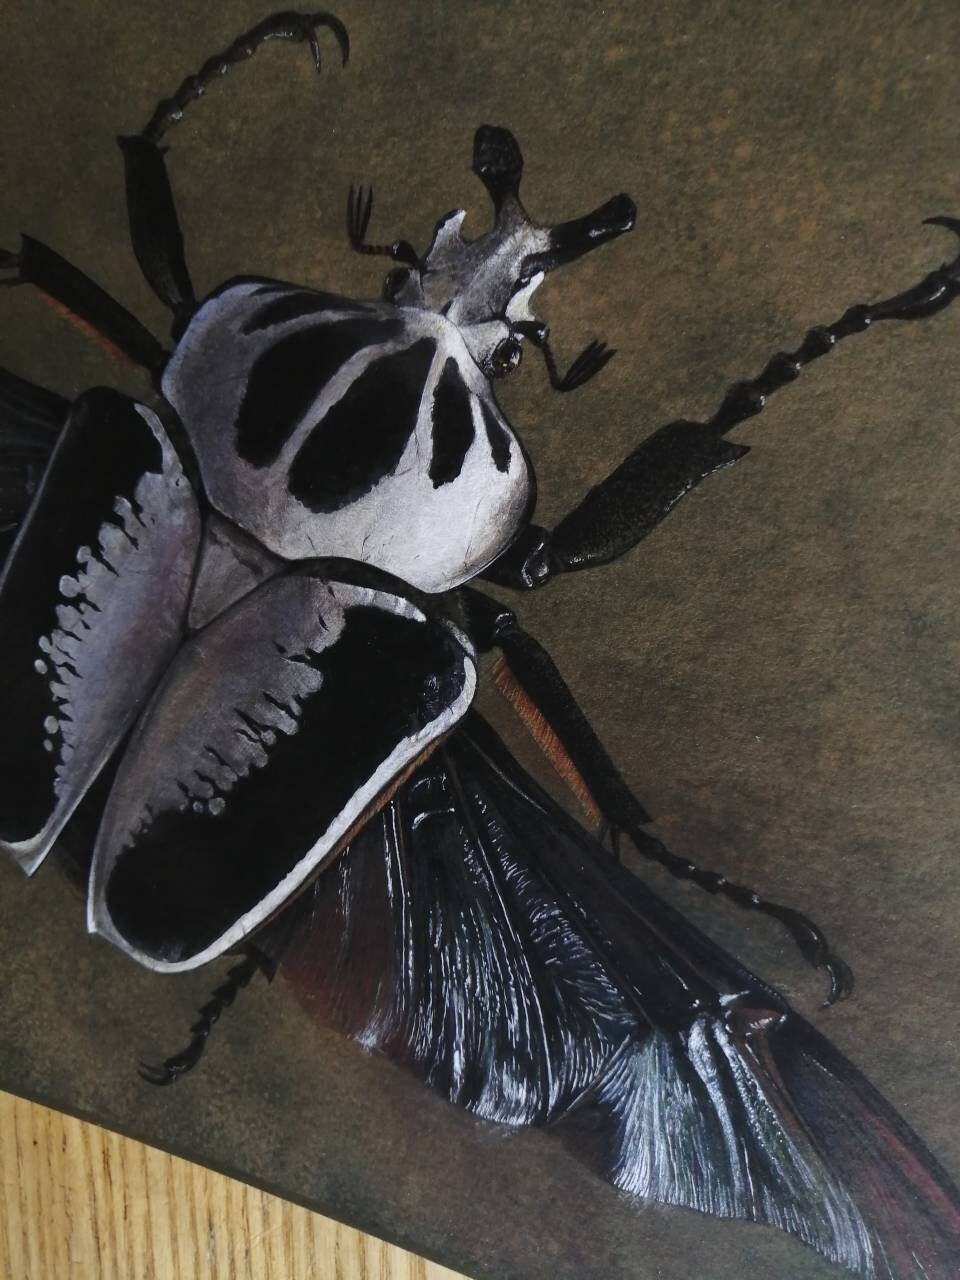 Goliathus regius in flight - limited edition A4 size print Goliath Beetle